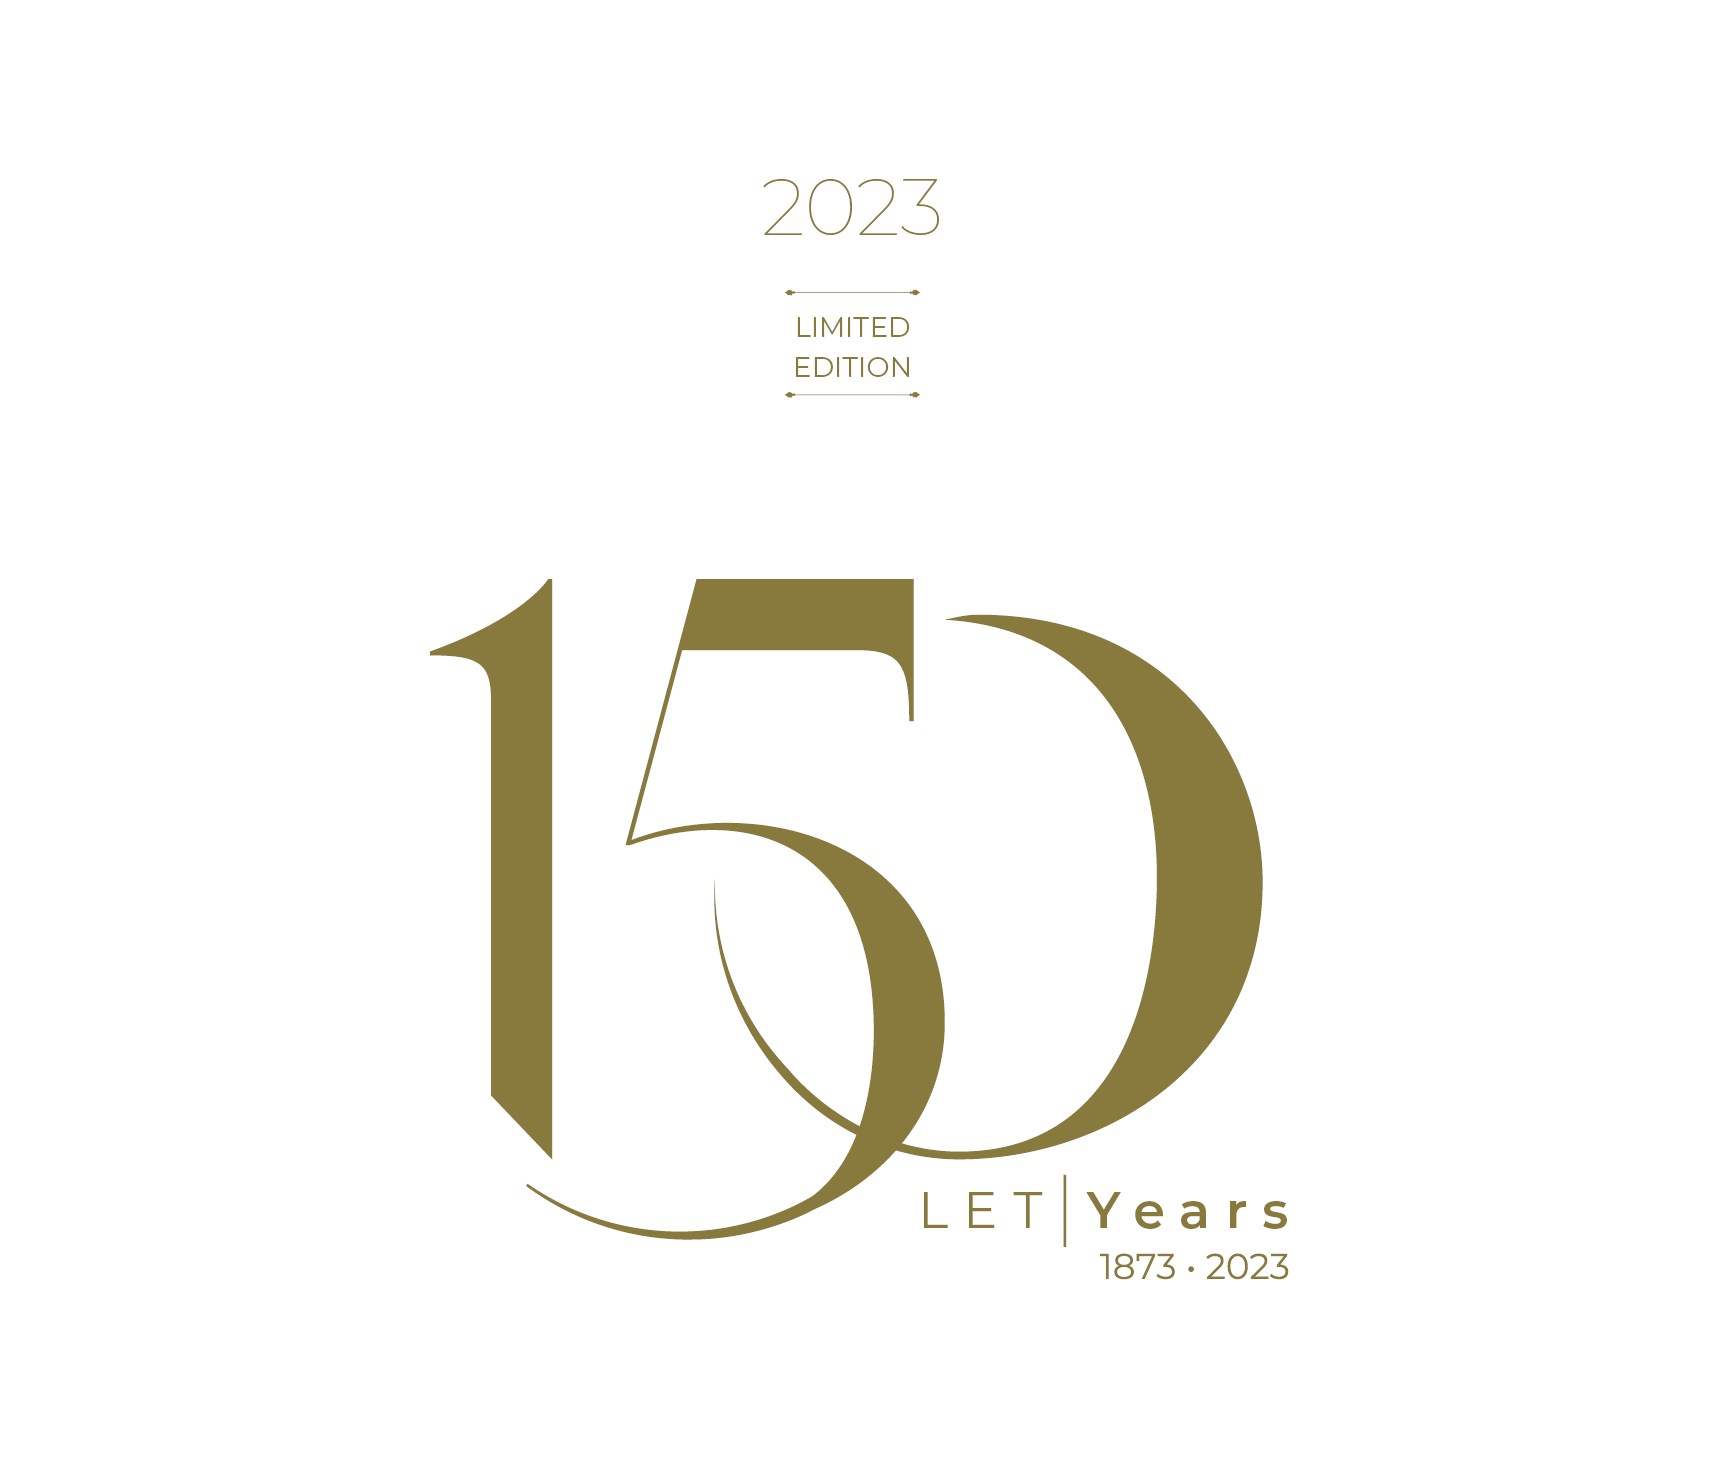 On occasion of 150th anniversary of Cinkarna's establishment we created unique calendar for 2023